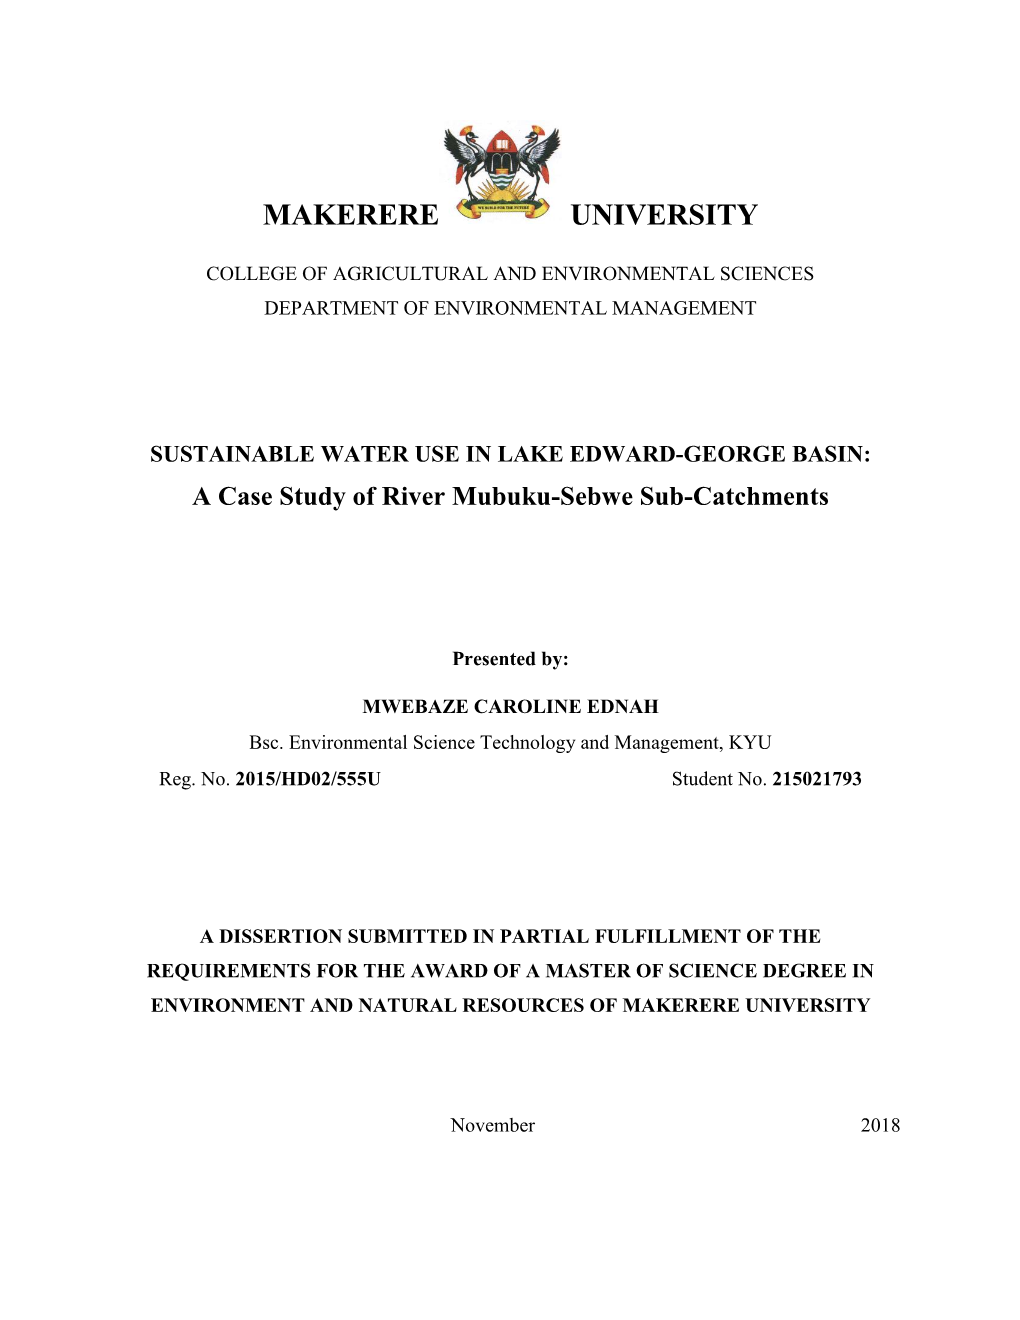 A Case Study of River Mubuku-Sebwe Sub-Catchments